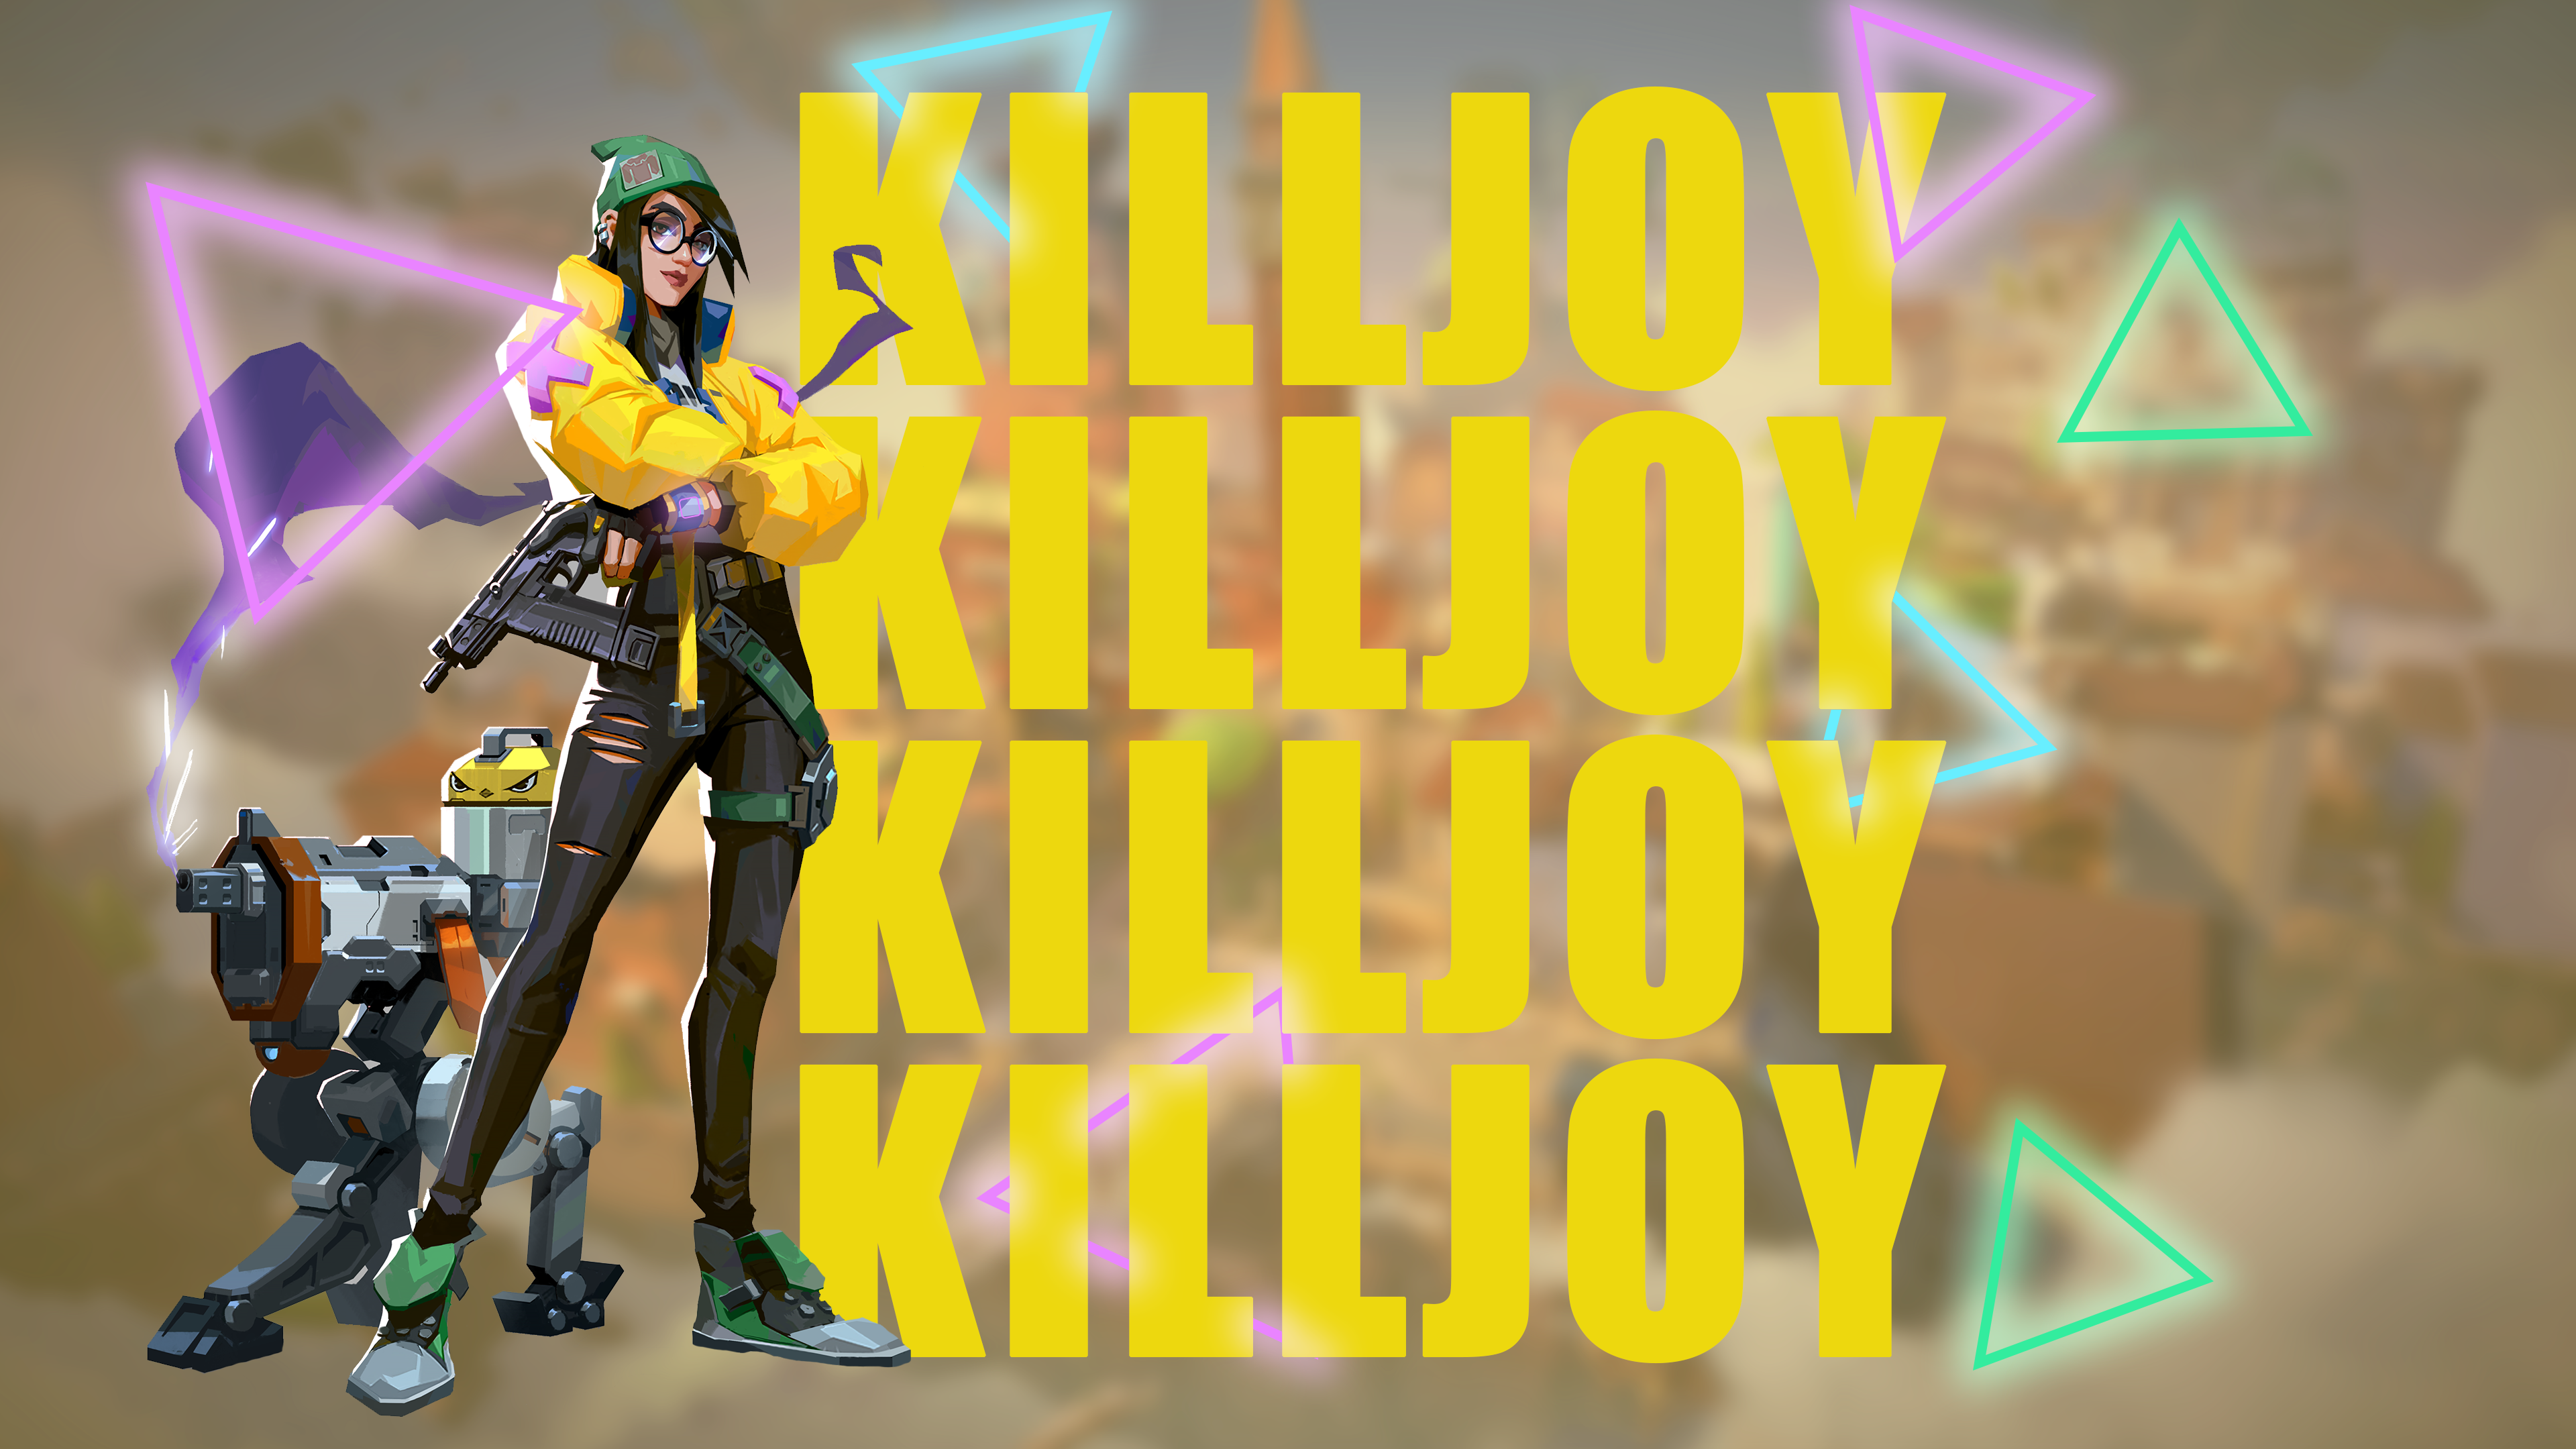 I Made 4K Killjoy Wallpaper. 